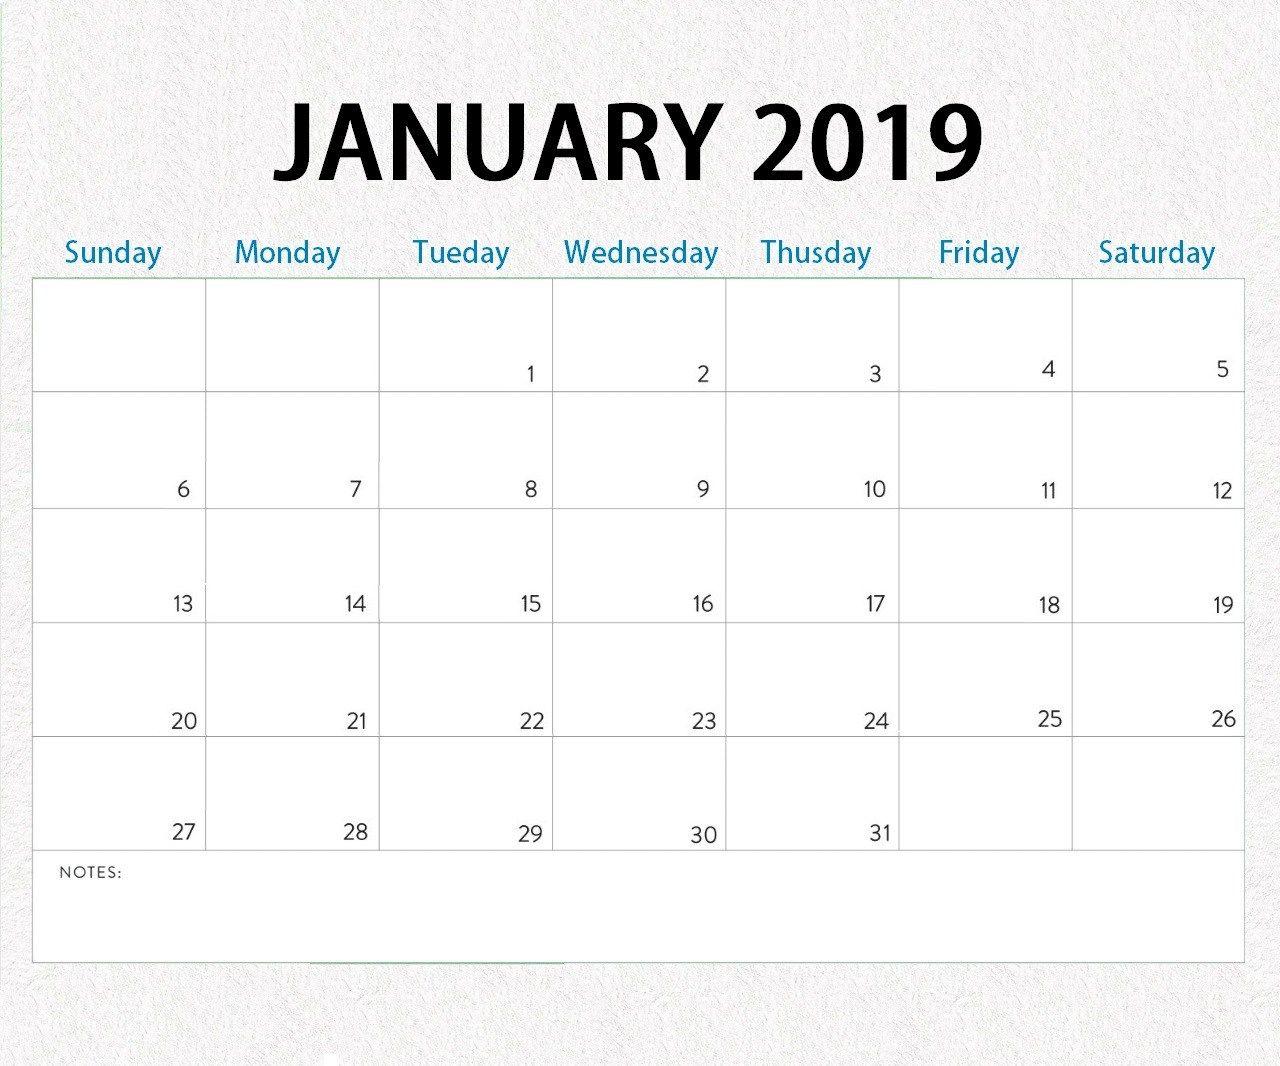 Editable Calendar Wallpaper. Free Download The January Editable